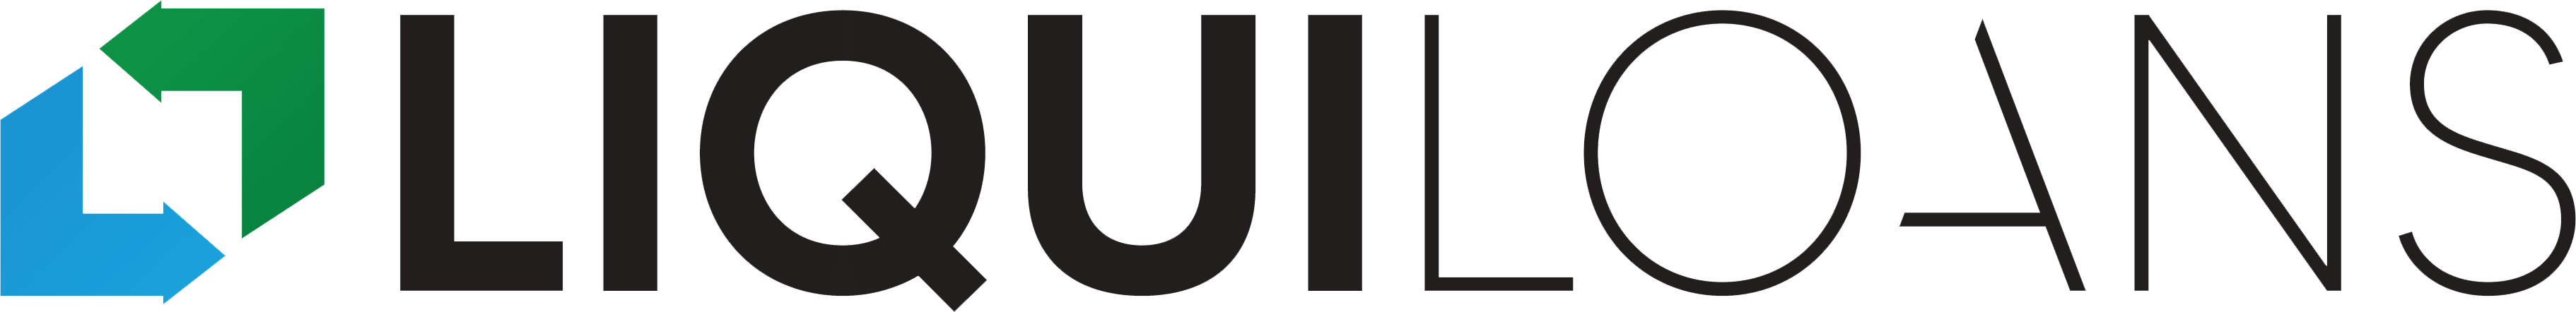 LiquiLoans logo